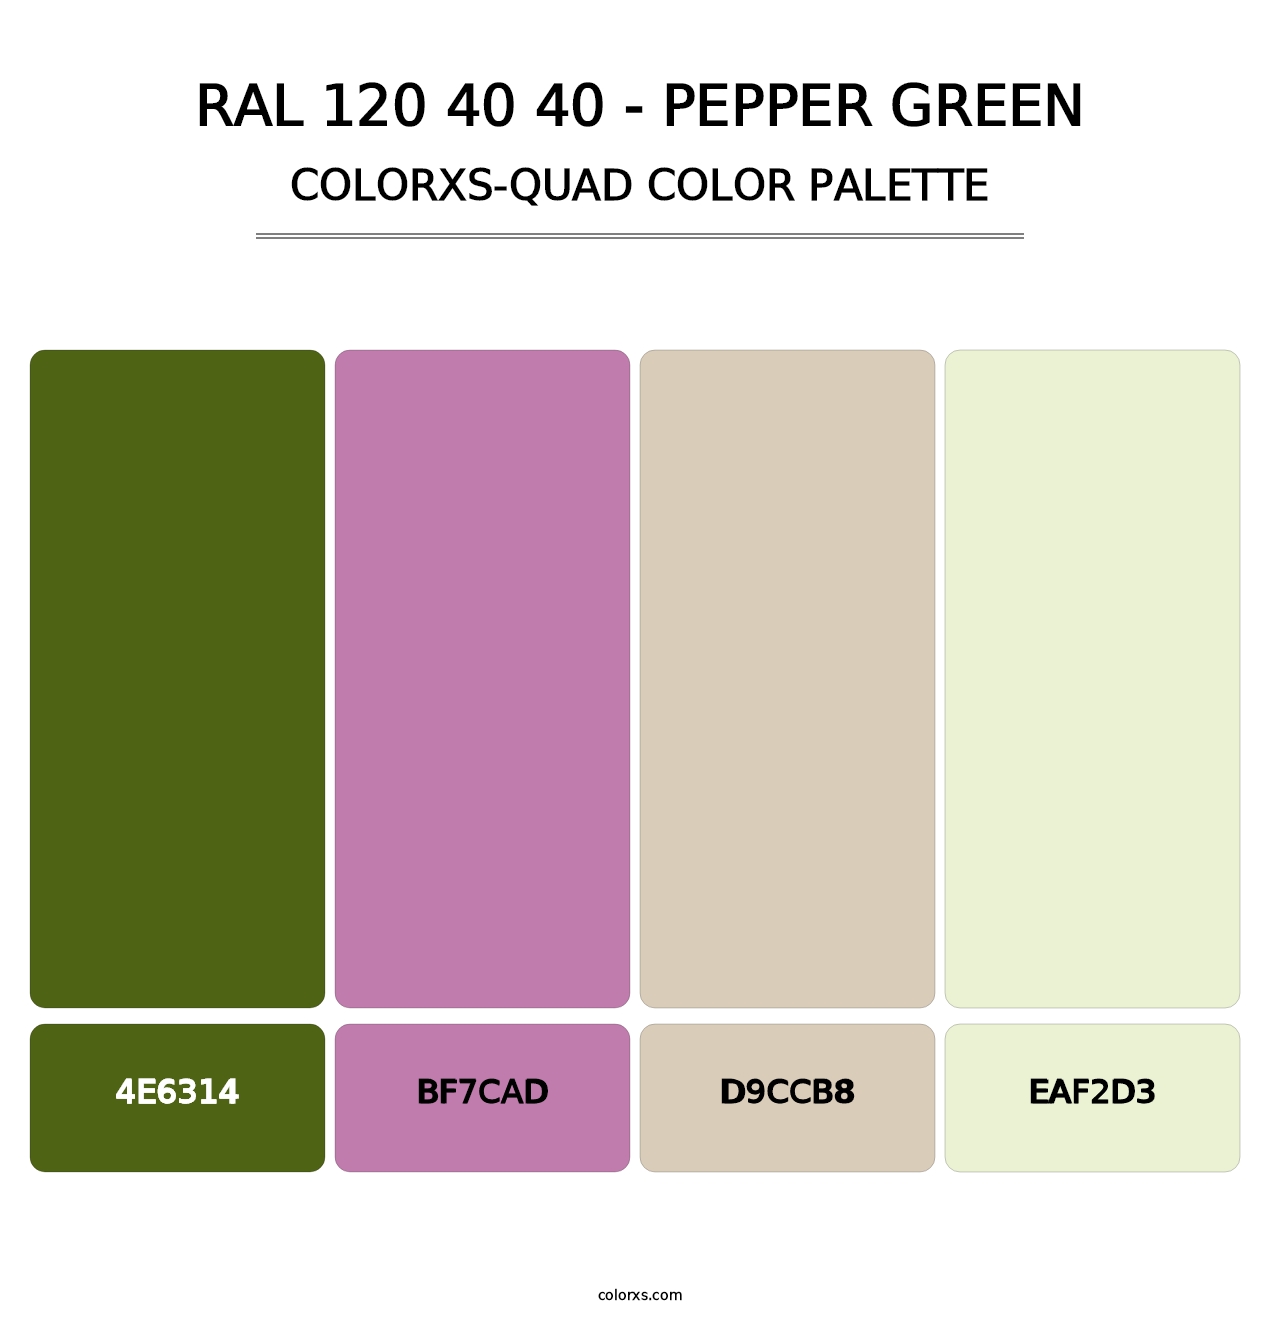 RAL 120 40 40 - Pepper Green - Colorxs Quad Palette